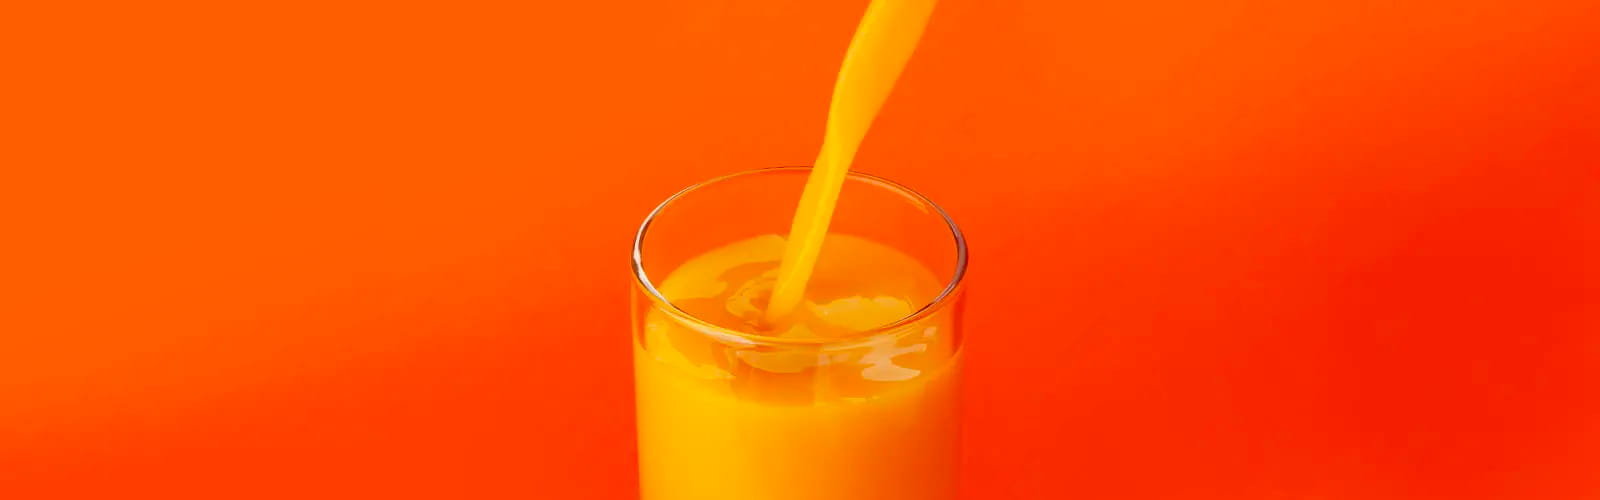 Un verre de jus d'orange versé